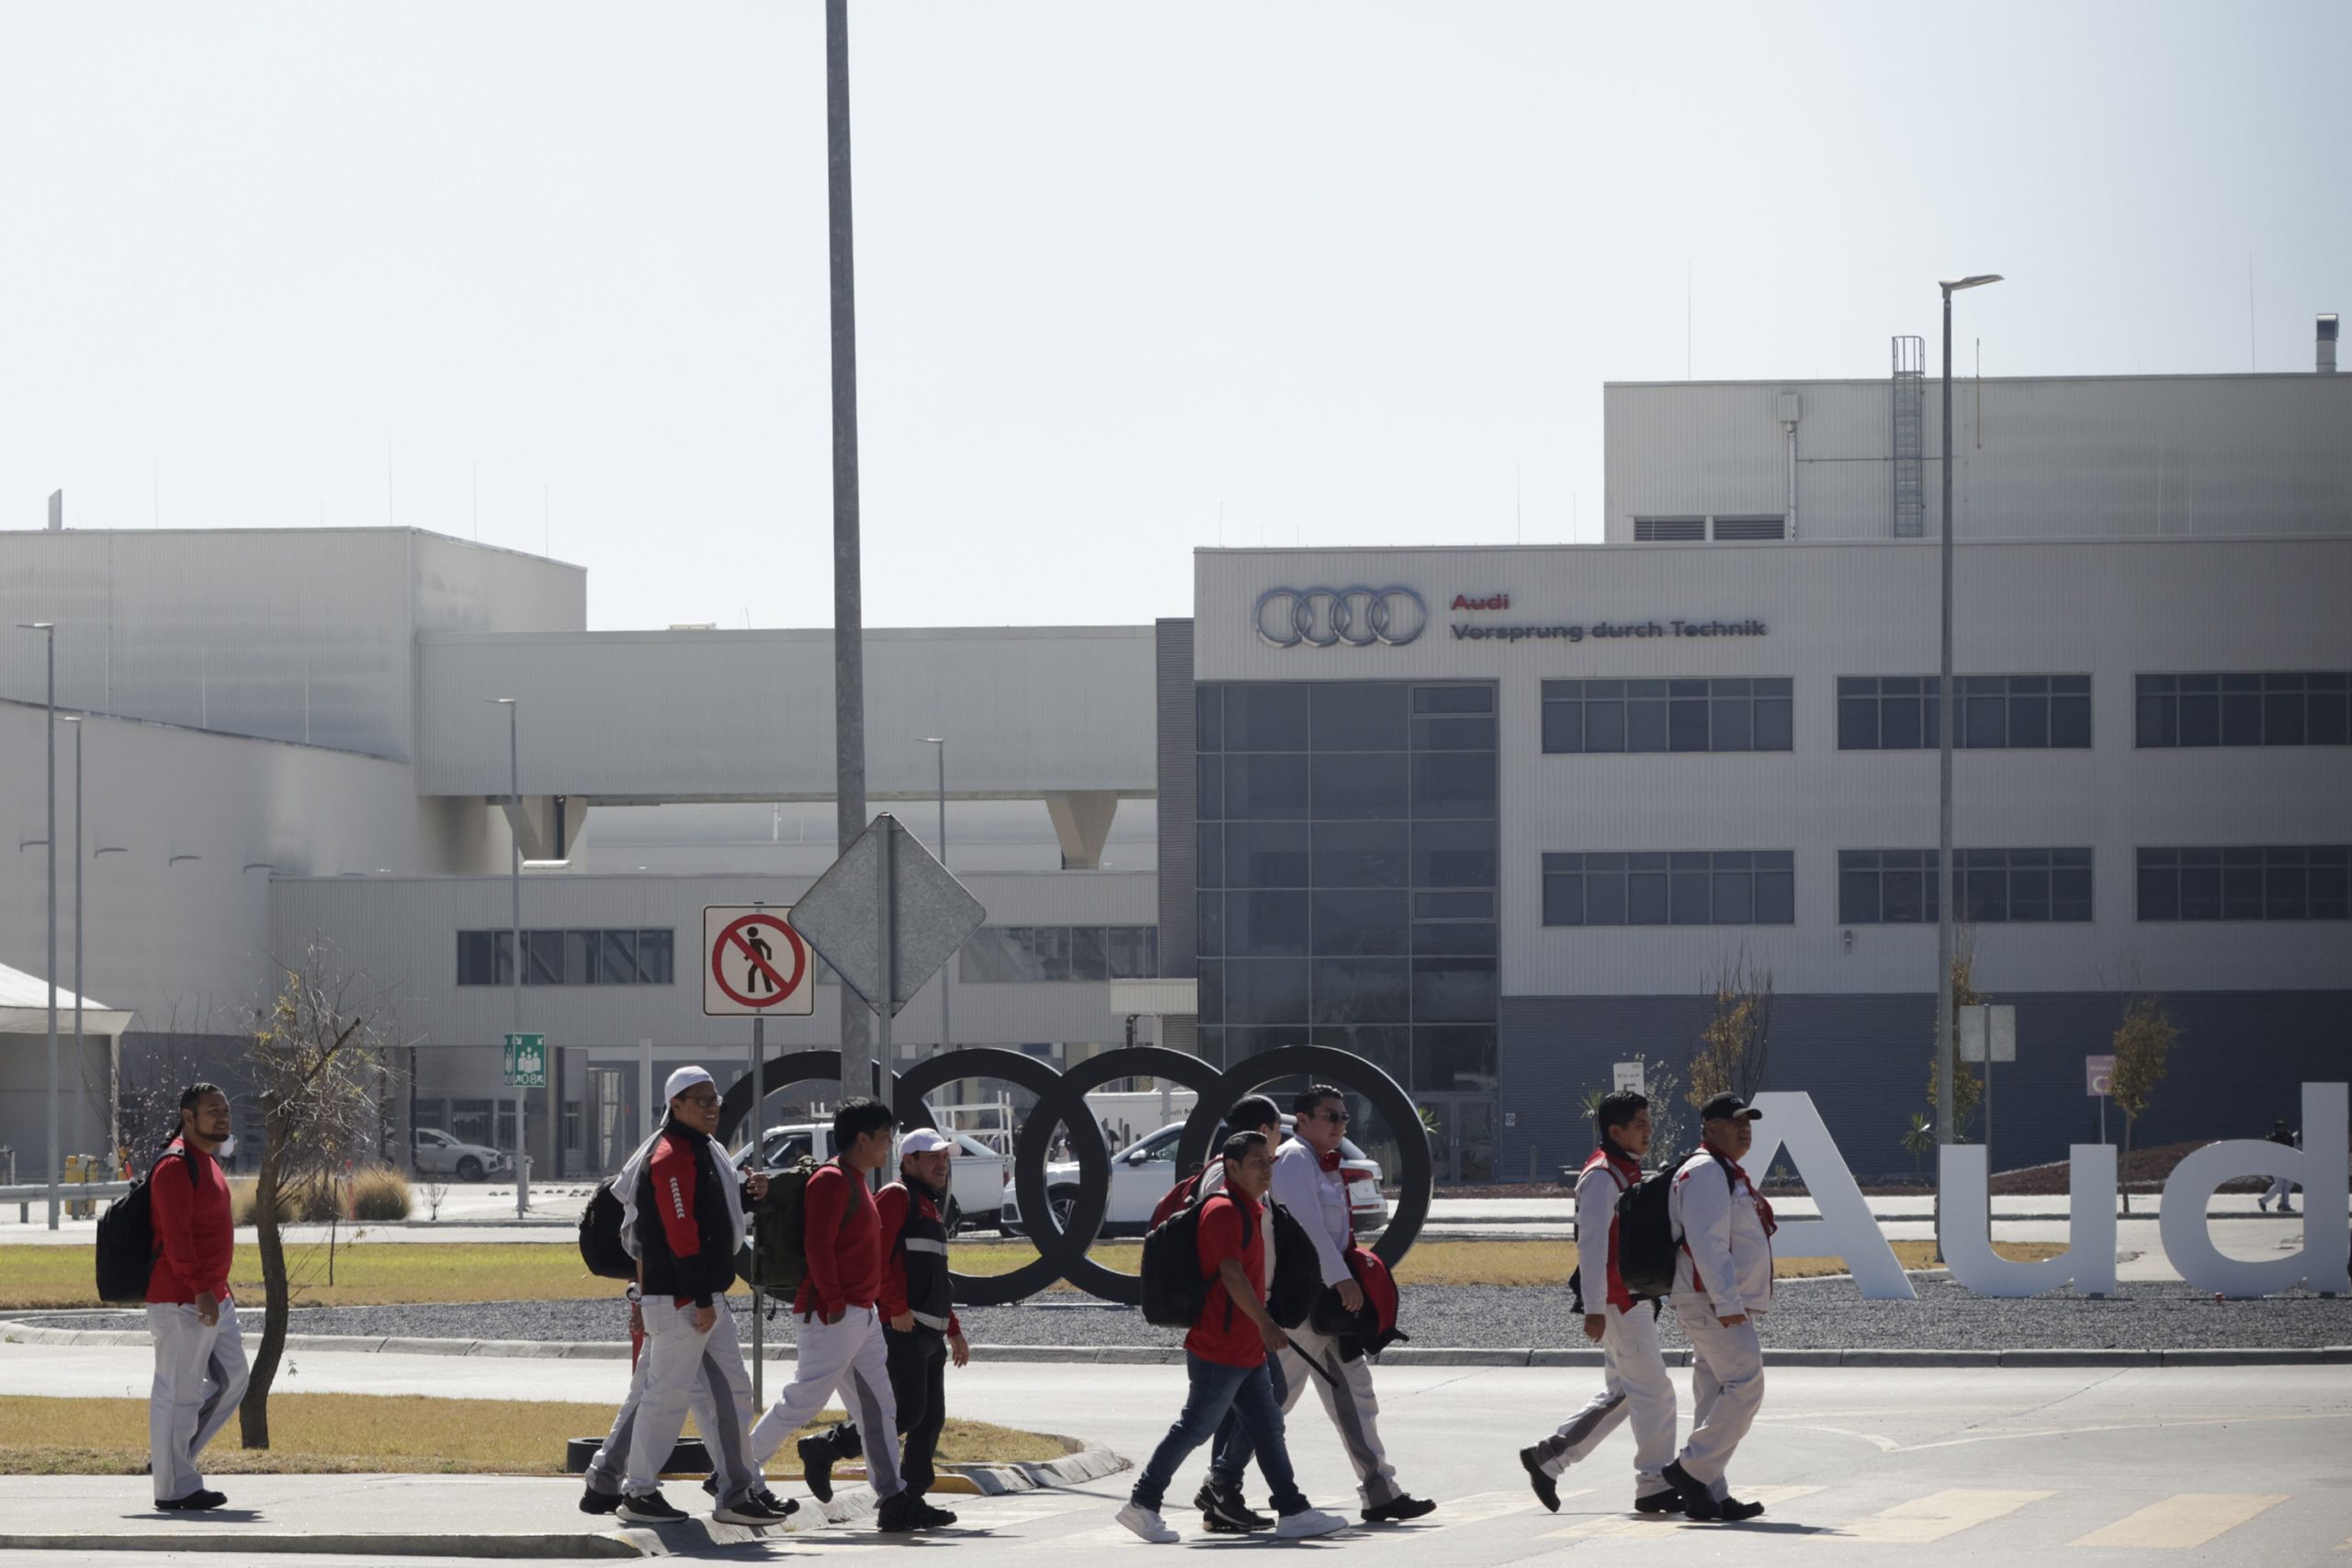 Huelga en Audi México llega al día 4, empresa pide diálogo